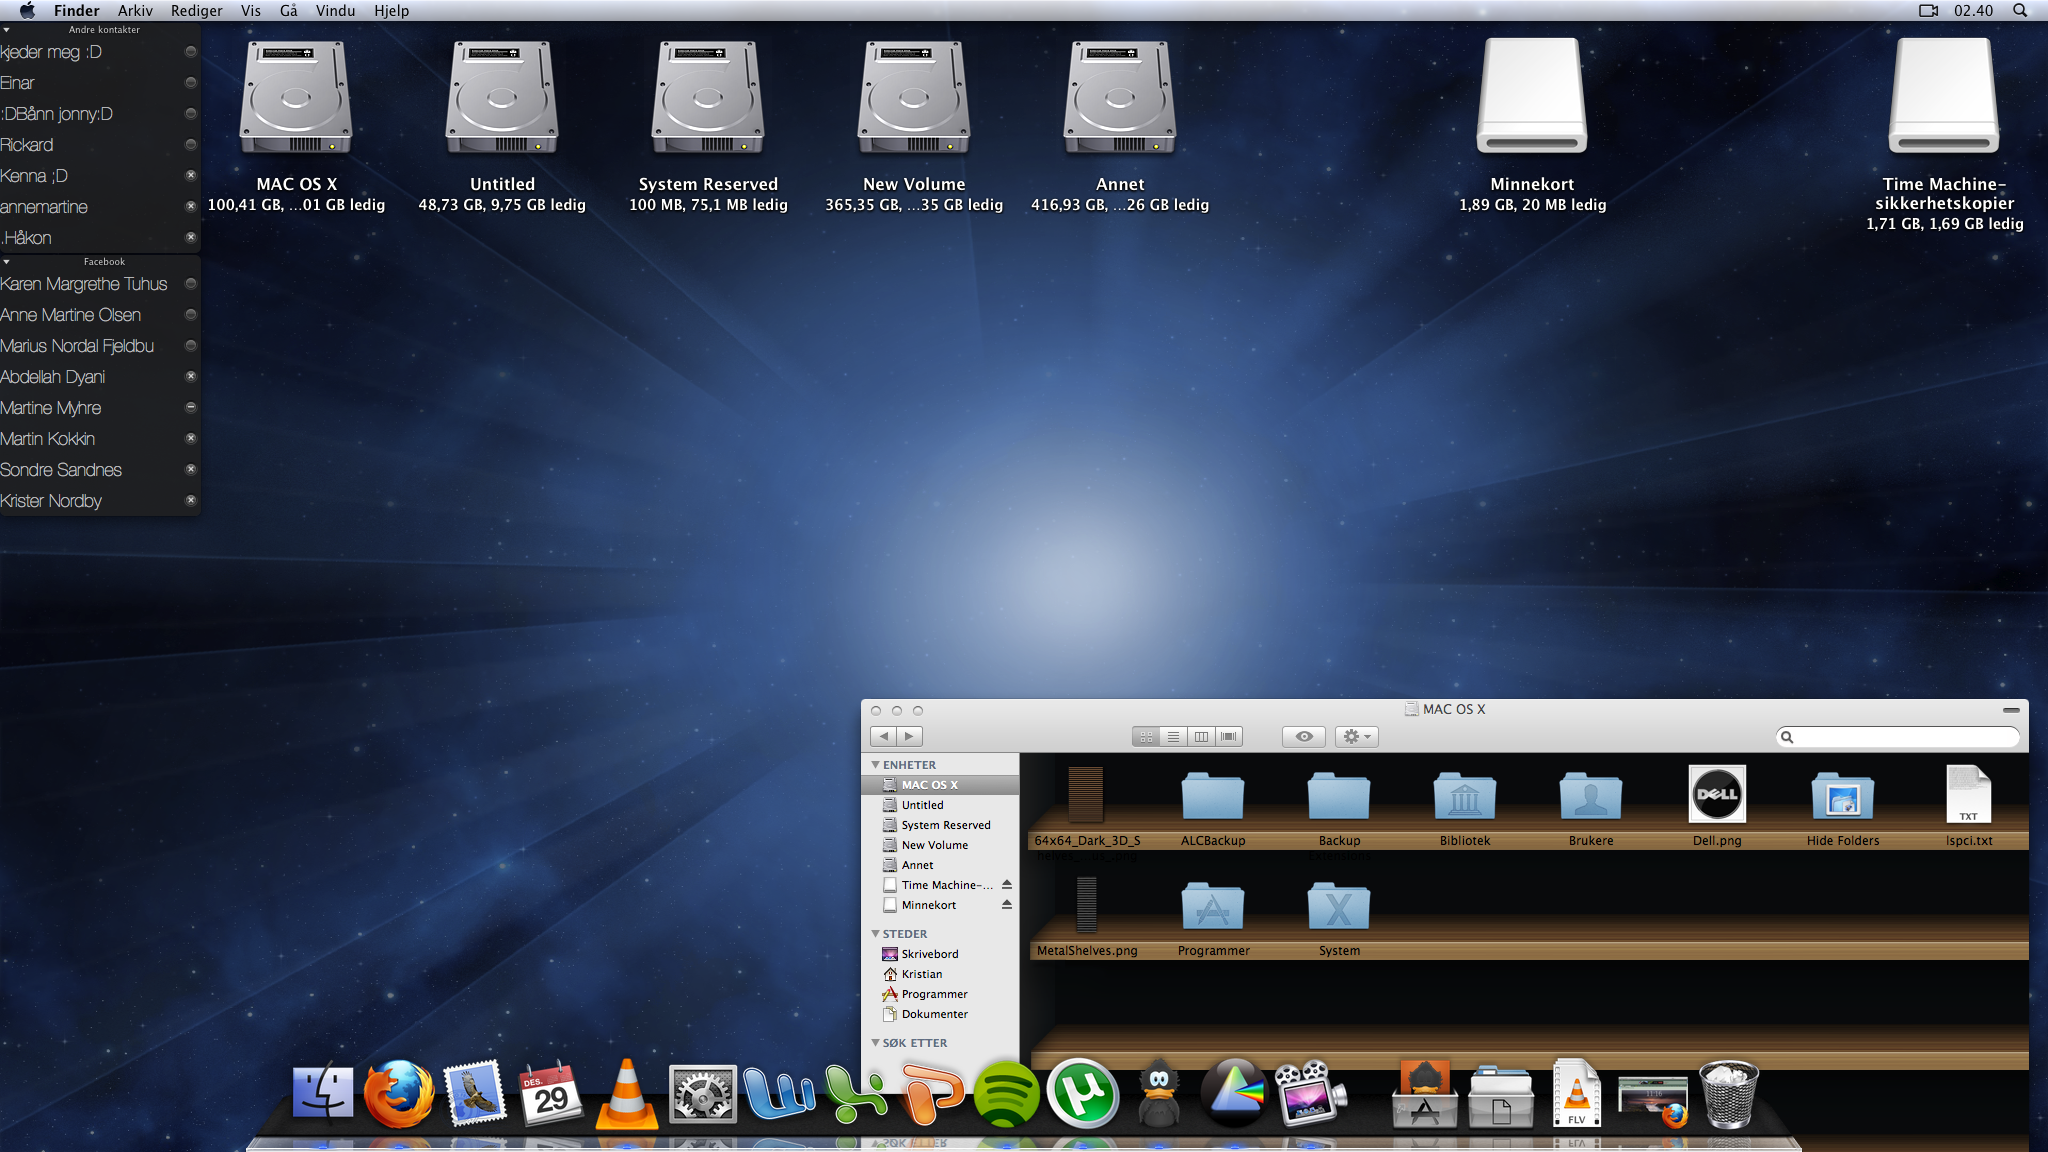 Mac OS X icq by phaticon on DeviantArt